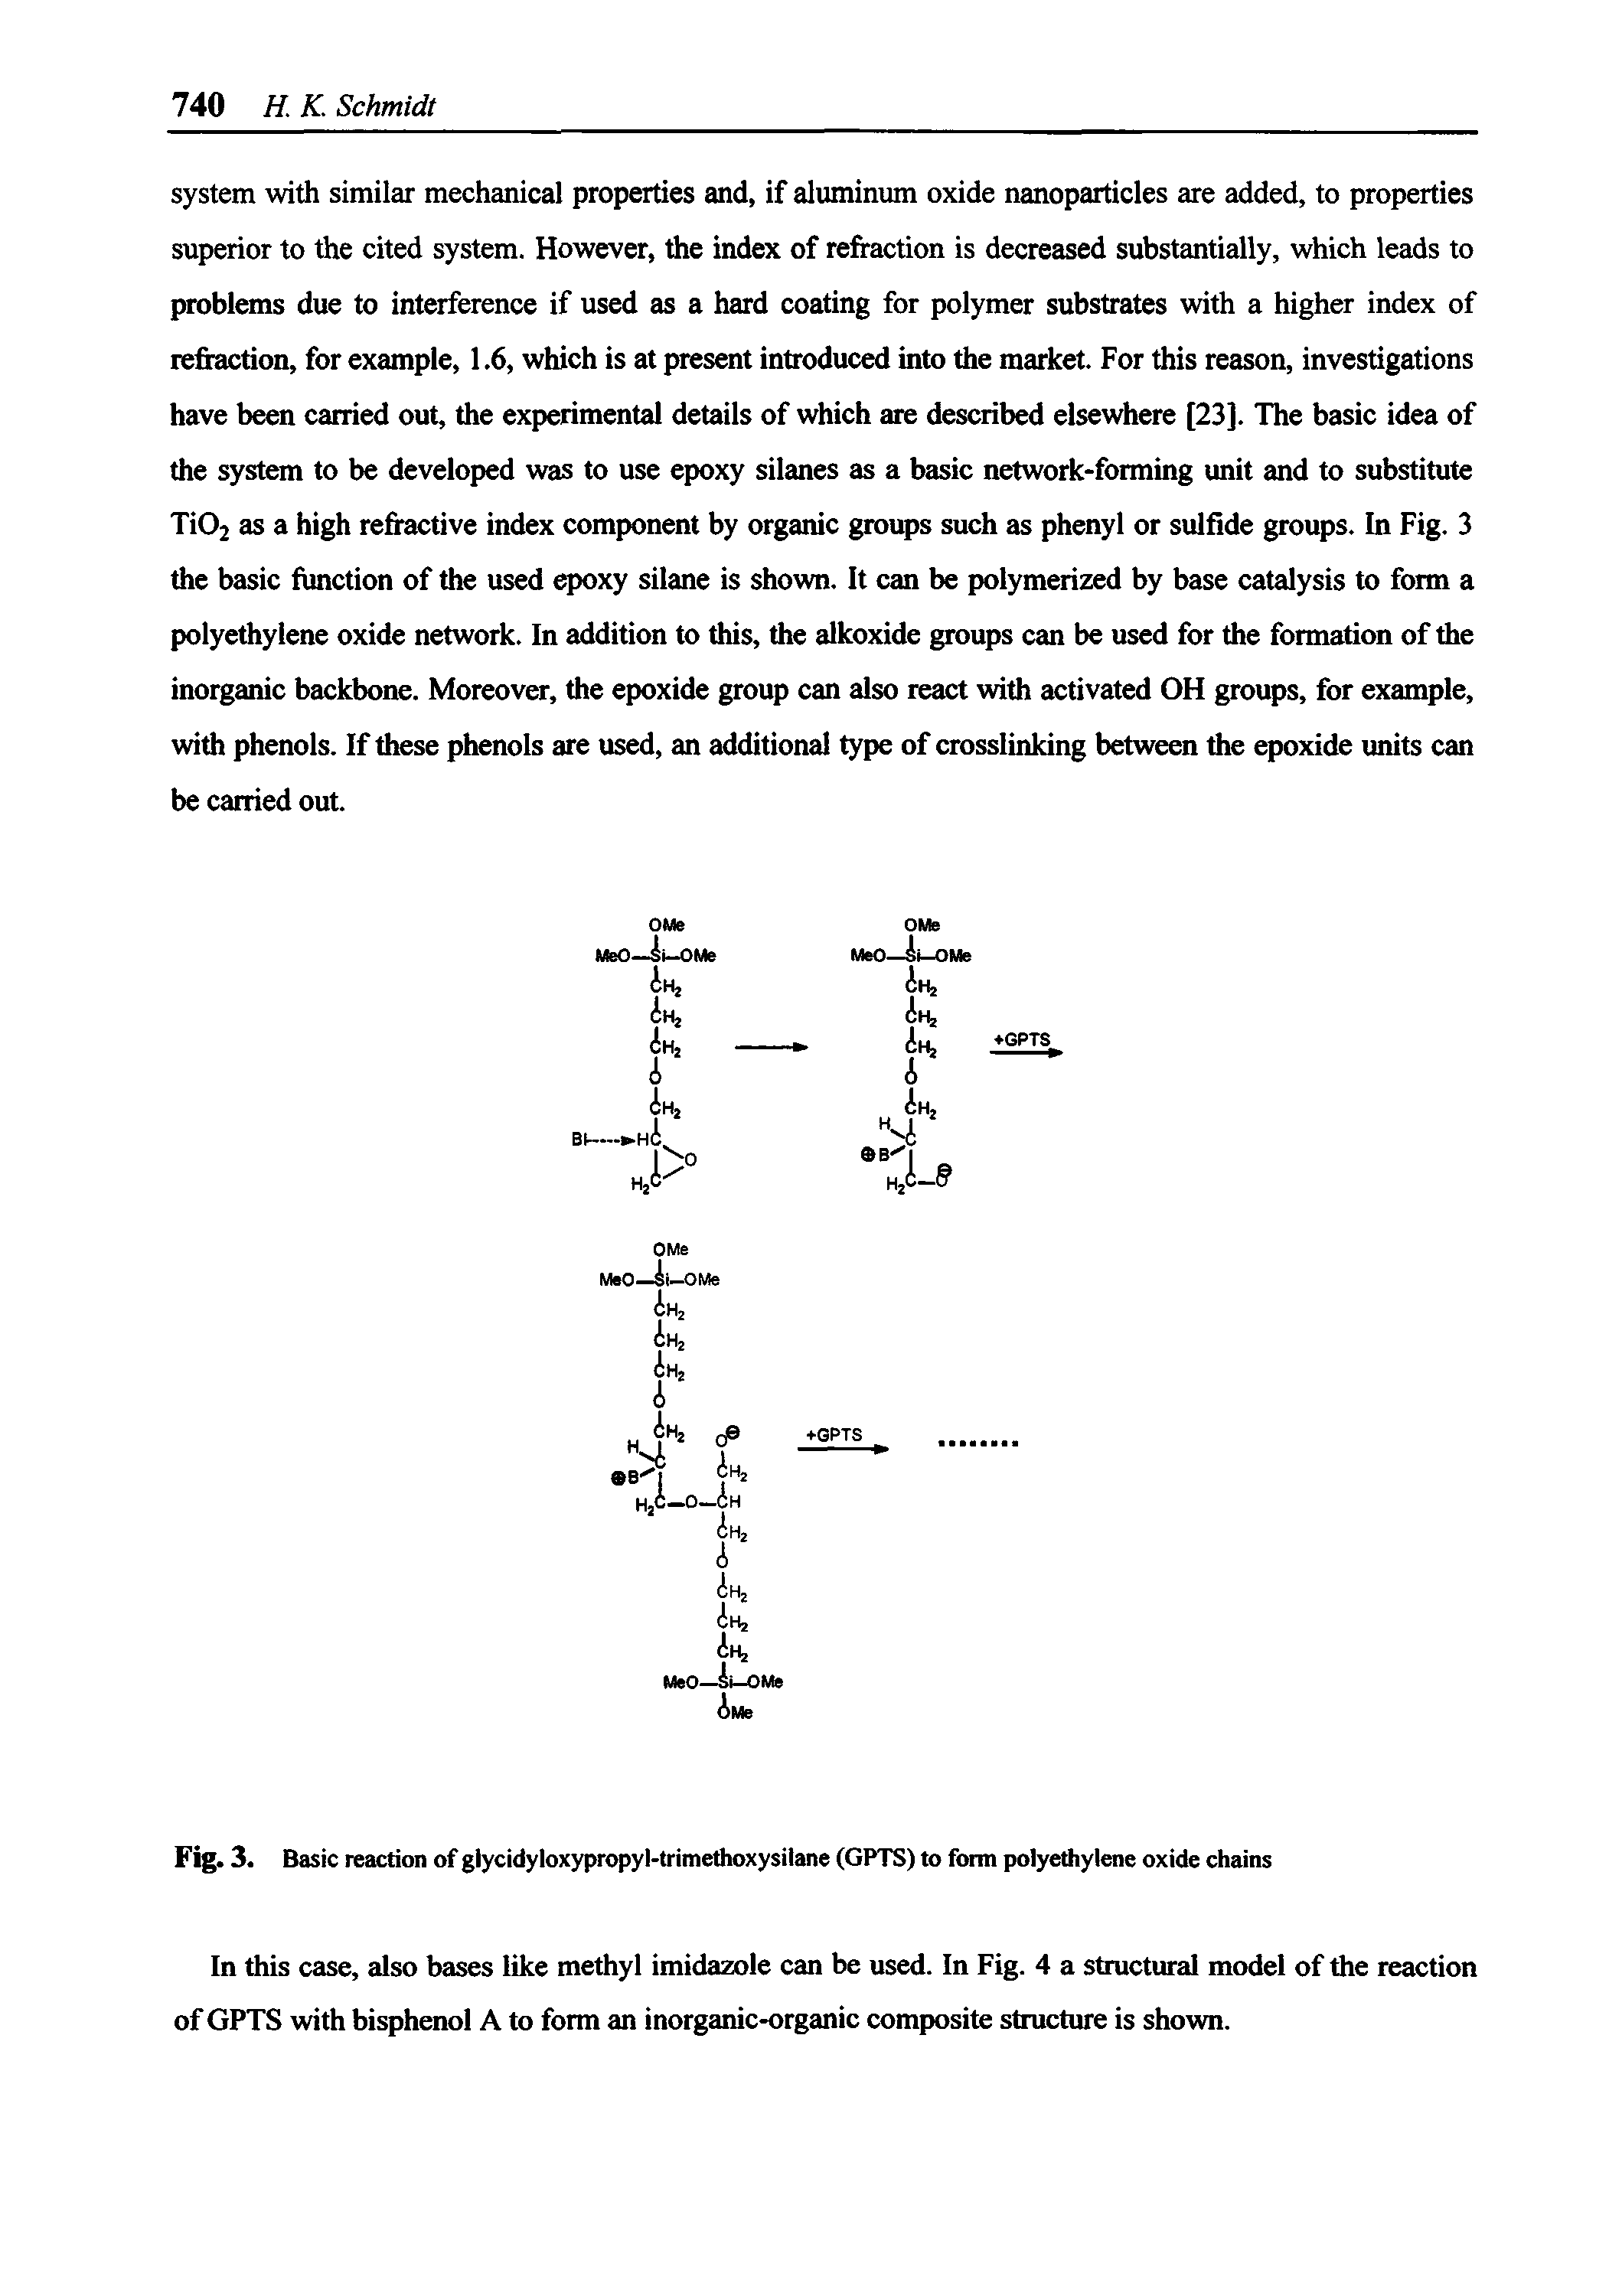 Fig. 3. Basic reaction of glycidyloxypropyl-trimethoxysilane (GPTS) to form polyethylene oxide chains...